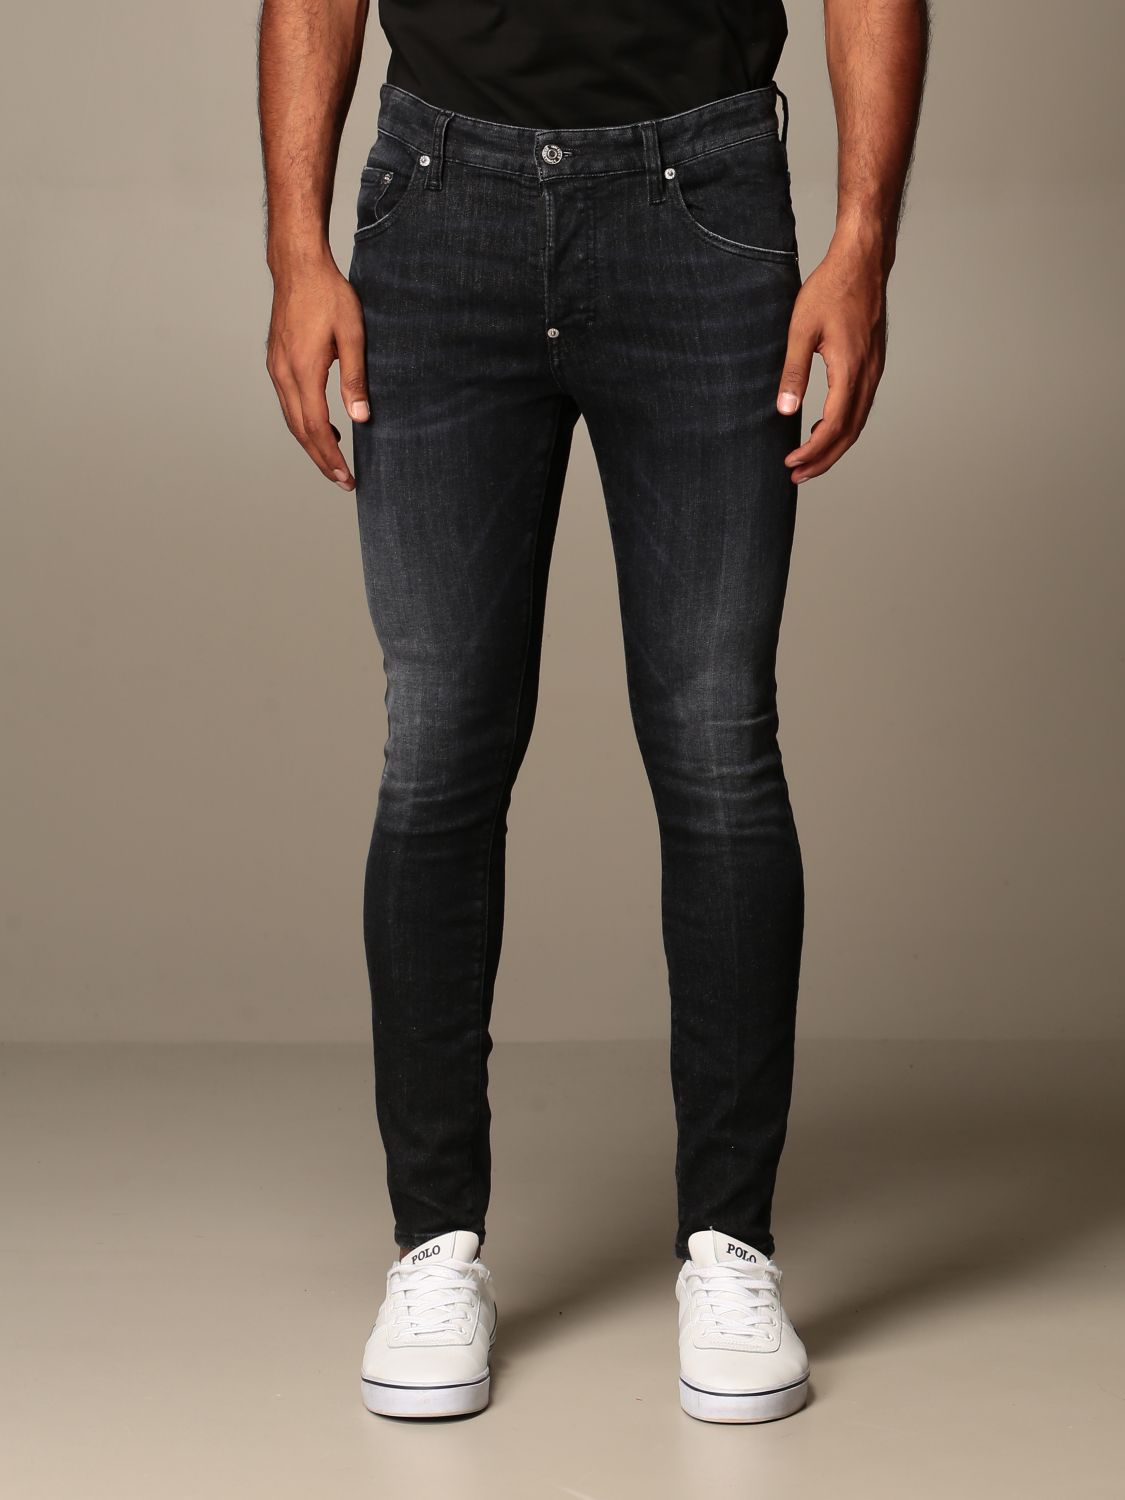 black dsquared2 jeans